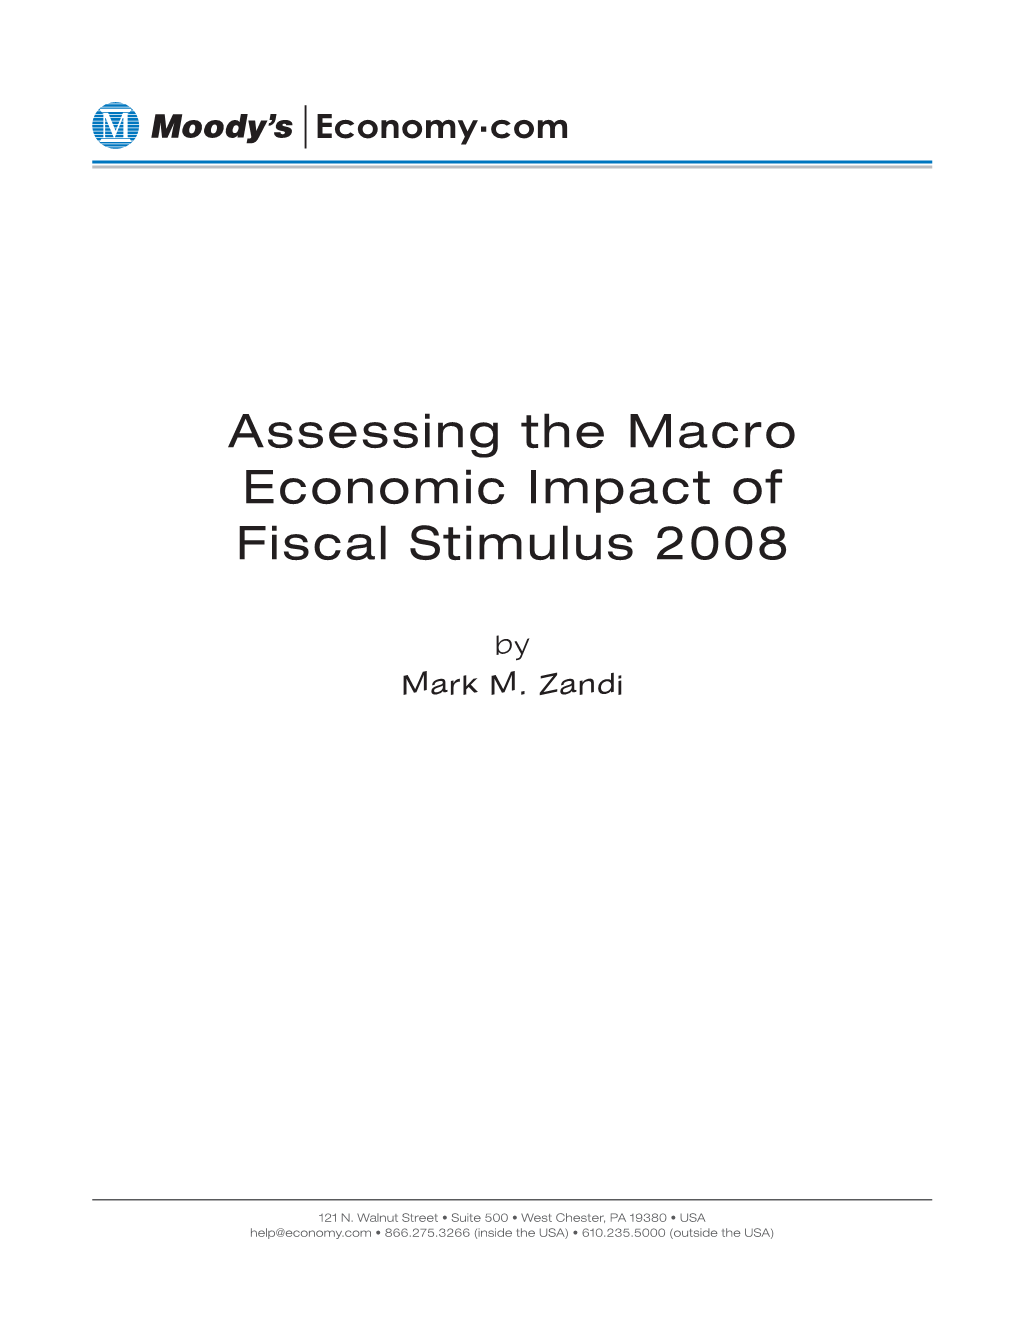 Assessing the Macro Economic Impact of Fiscal Stimulus 2008